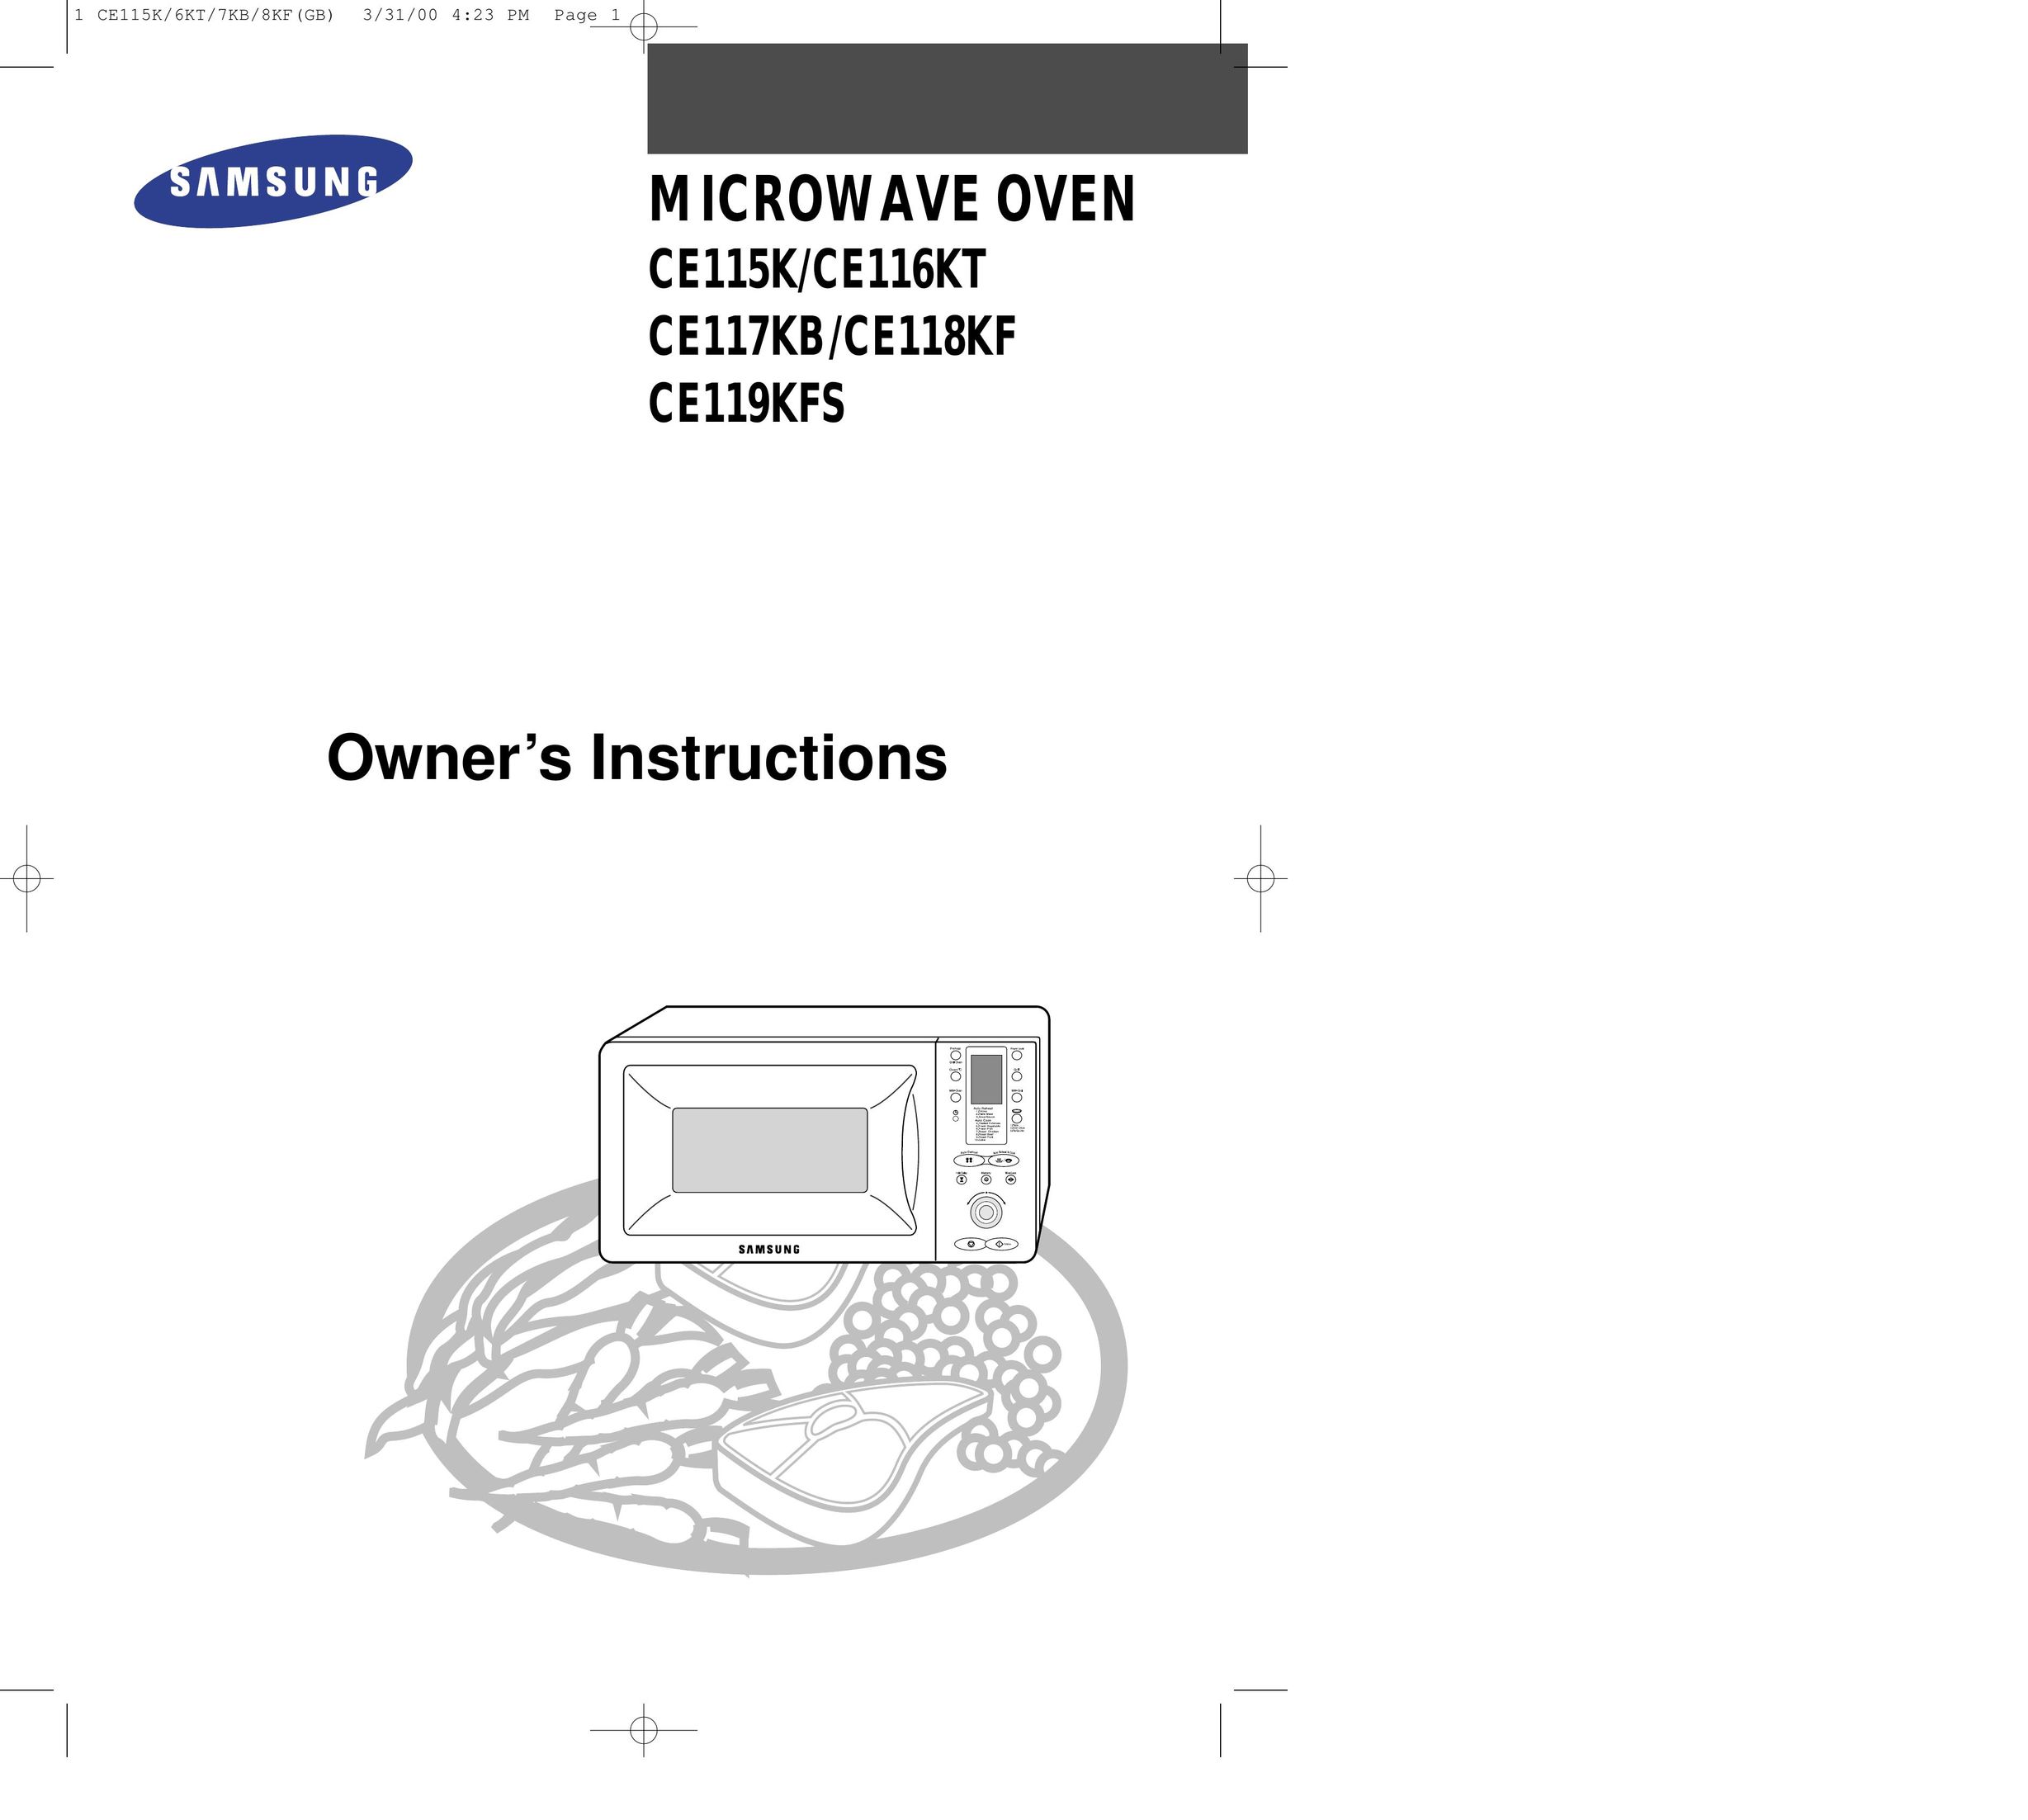 Samsung CE119KFS Microwave Oven User Manual